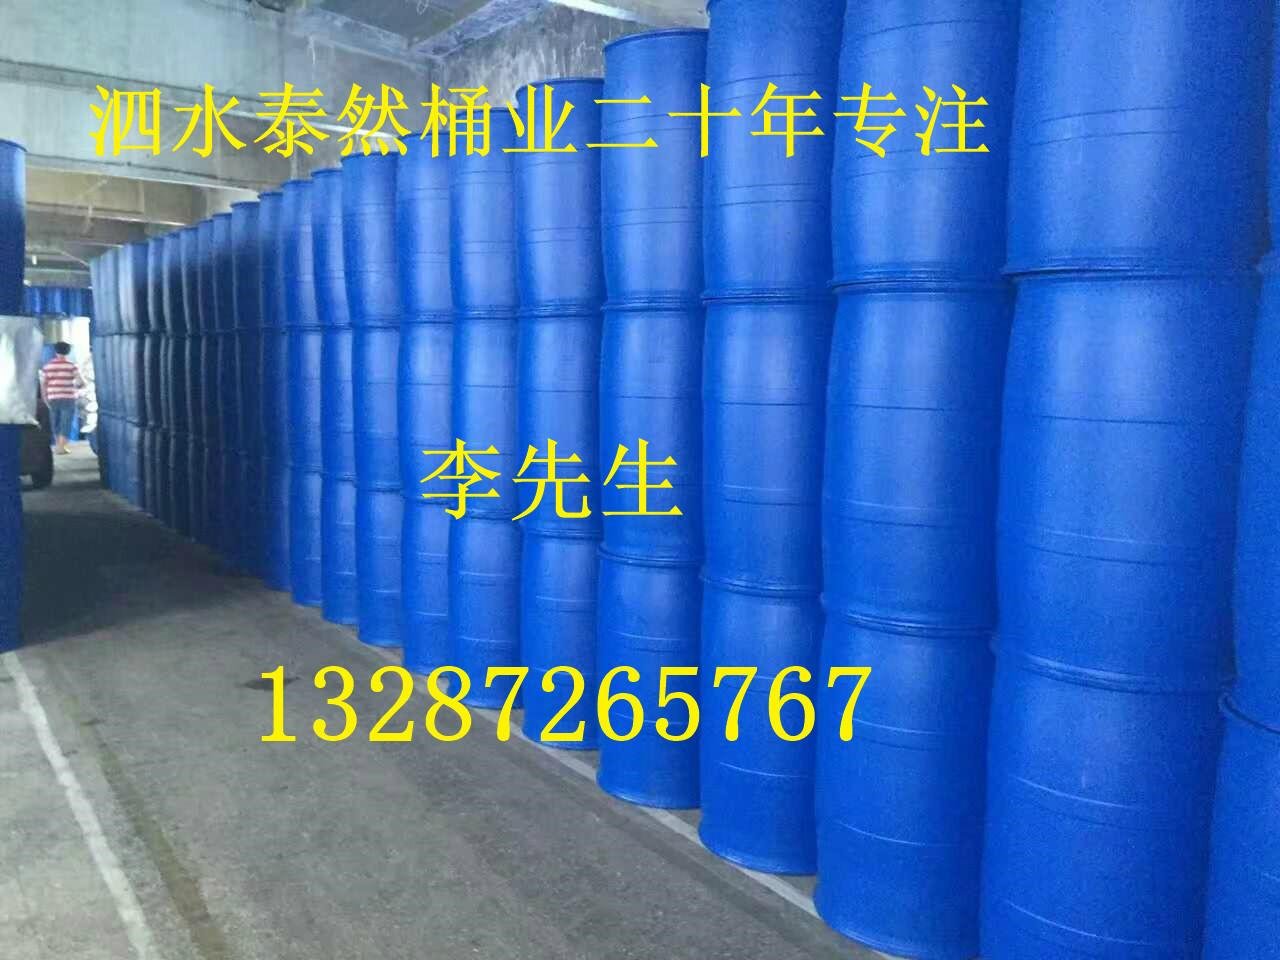 200L甲醇塑料桶|耐高温耐腐蚀|甲醇塑料包装桶|质优价廉 4